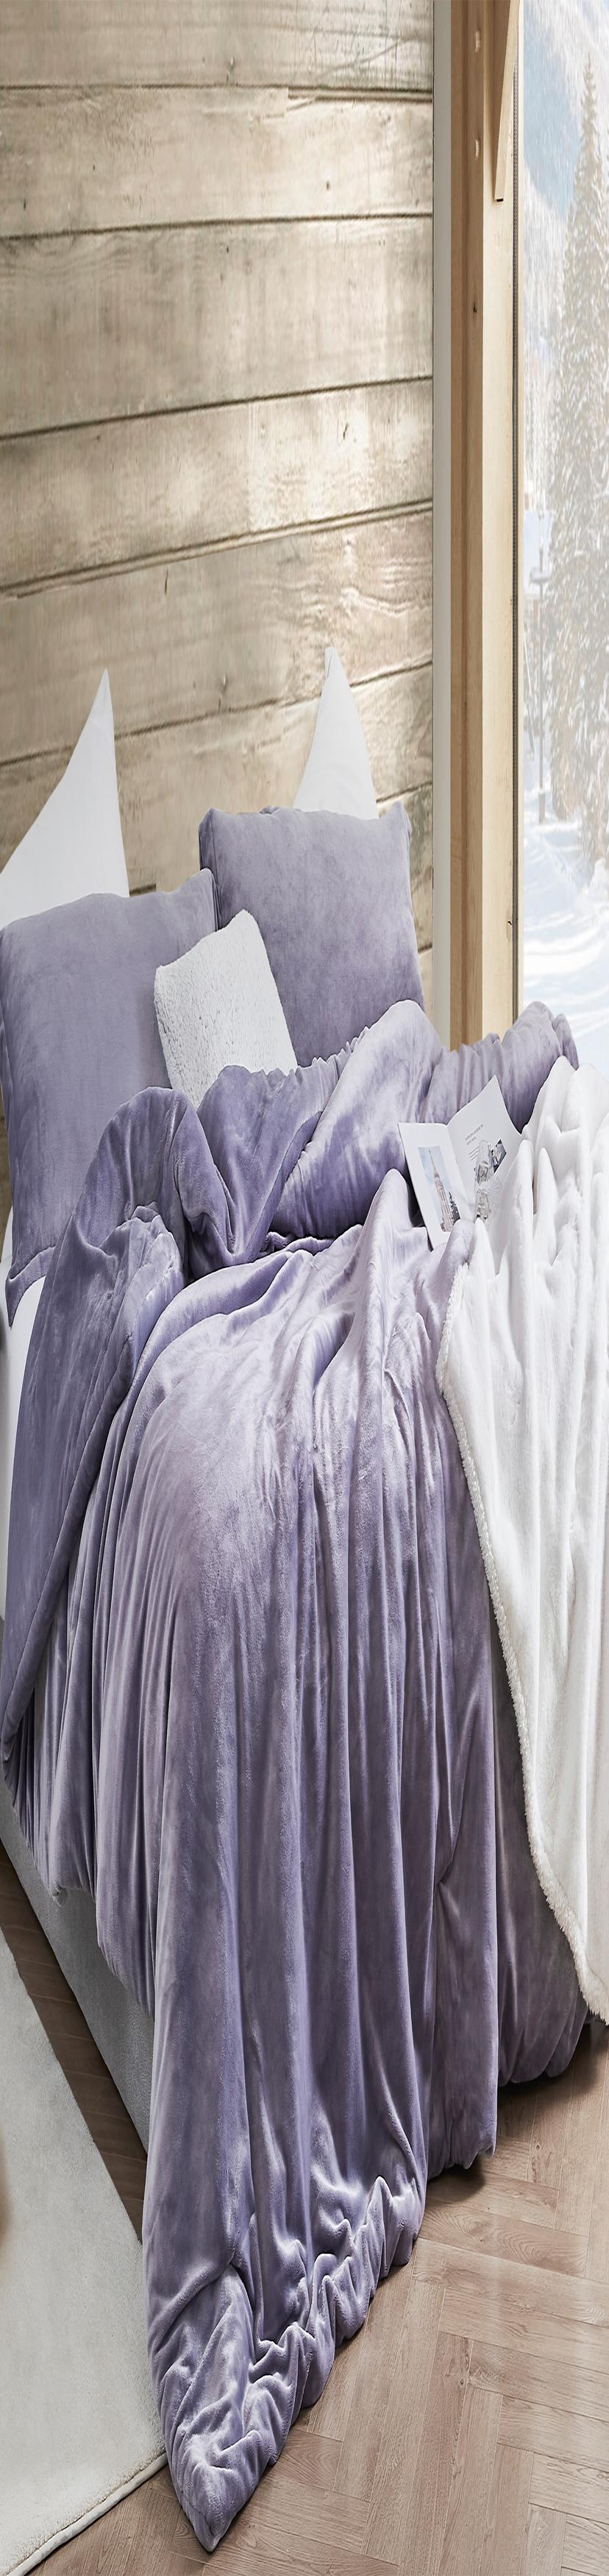 Coma Inducer® Oversized Queen Comforter - The Original Plush - Lavender Dusk